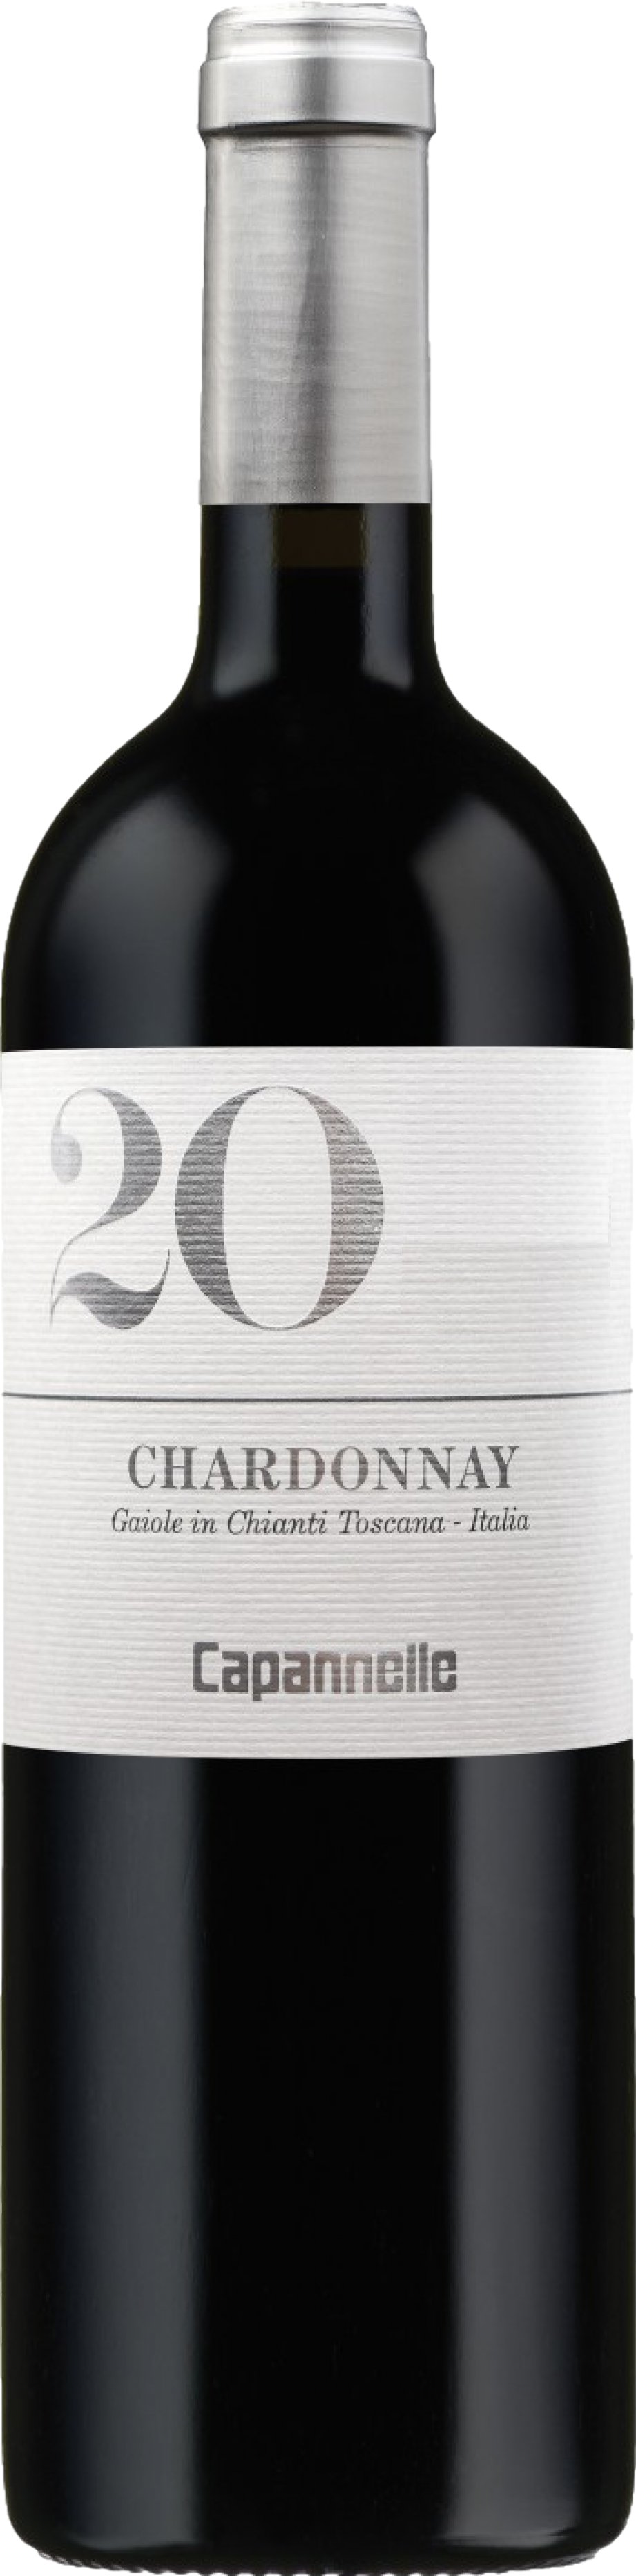 Capannelle Chardonnay 2019